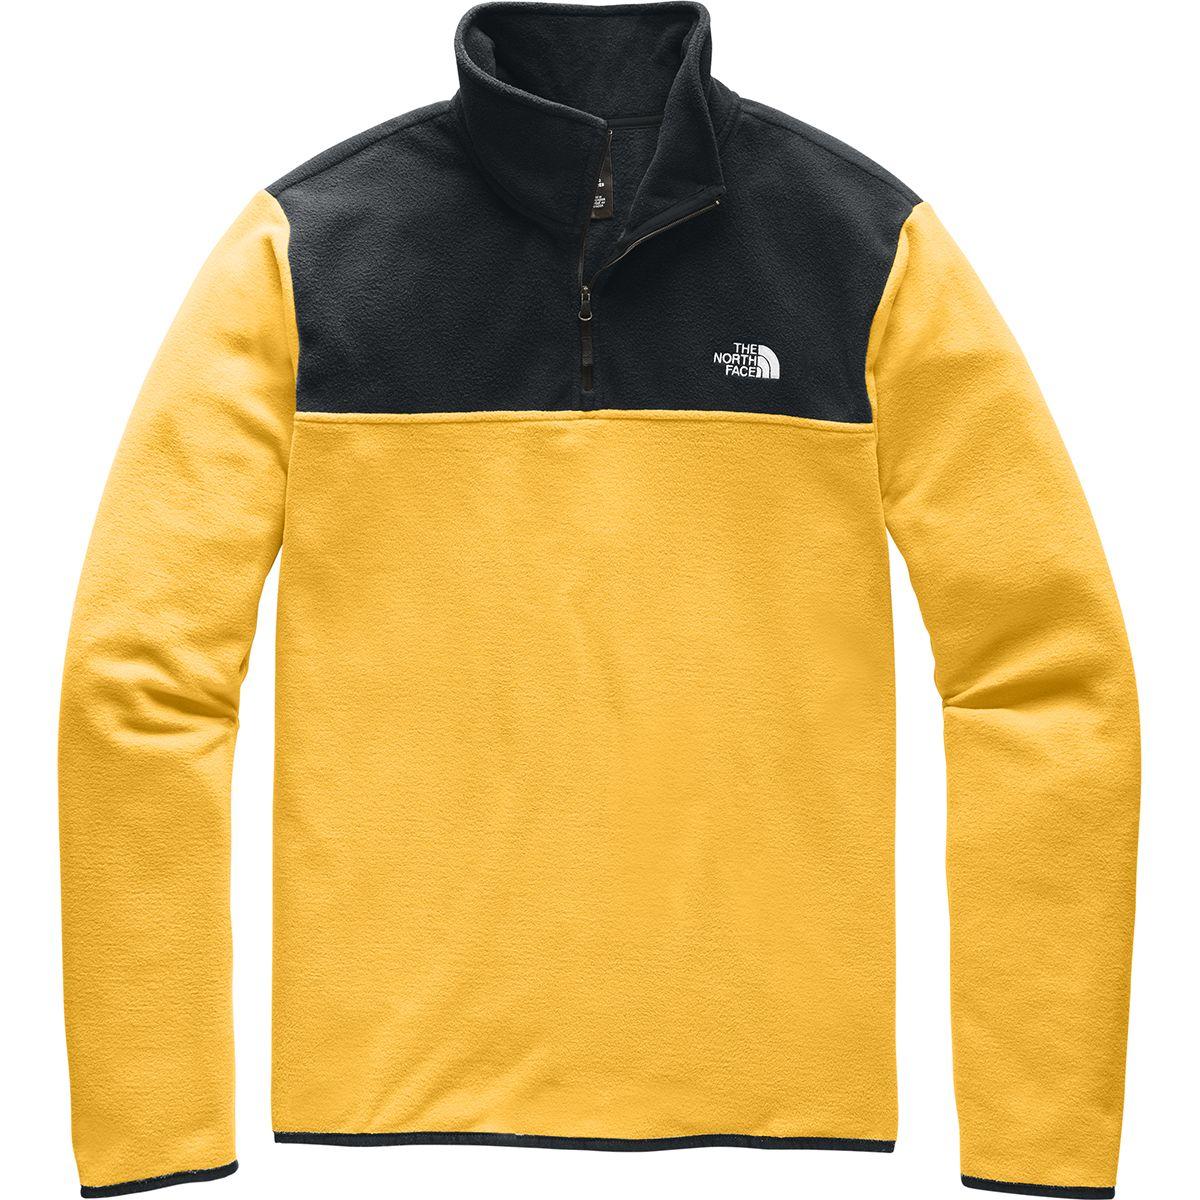 The North Face Tka Glacier 1/4-zip Fleece Jacket in Yellow for Men - Lyst